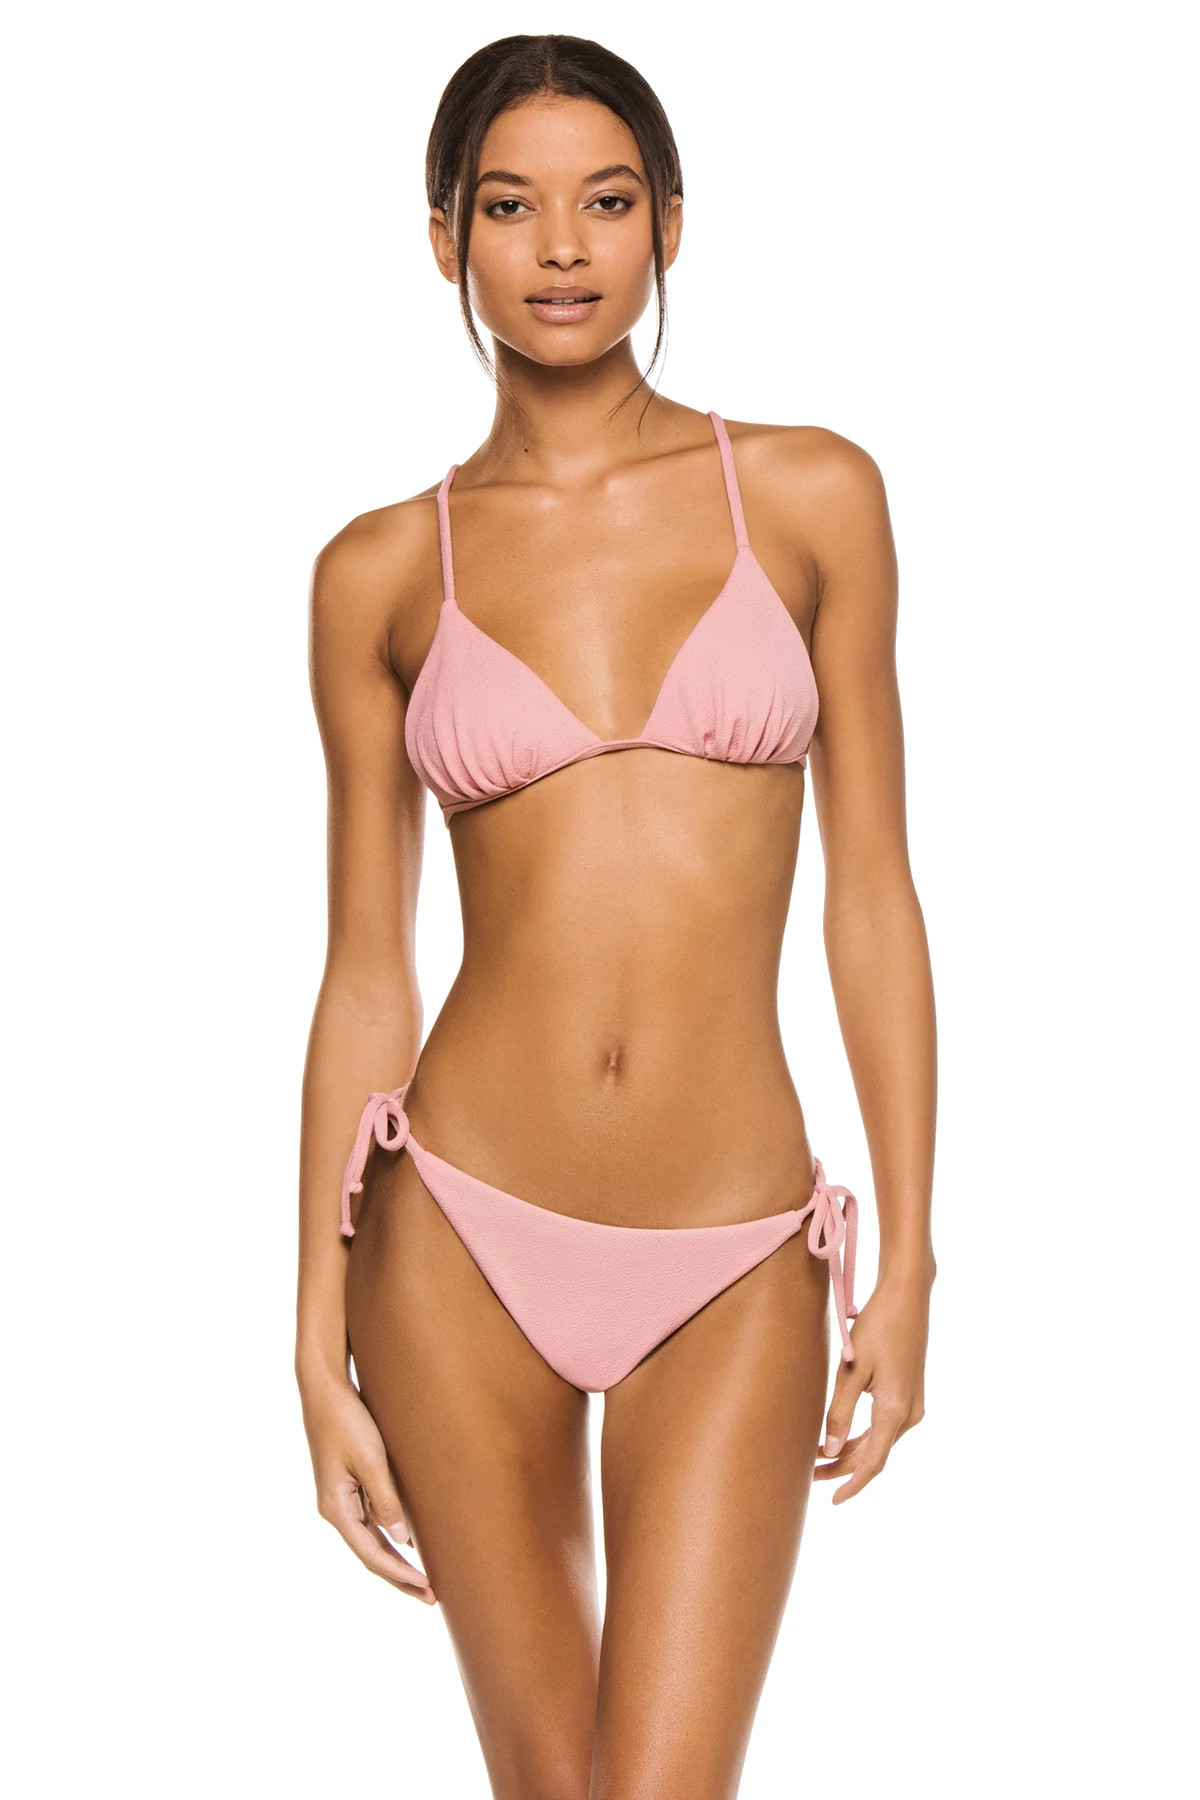 MAUVEGLOW Remi Triangle Bikini Top image number 1